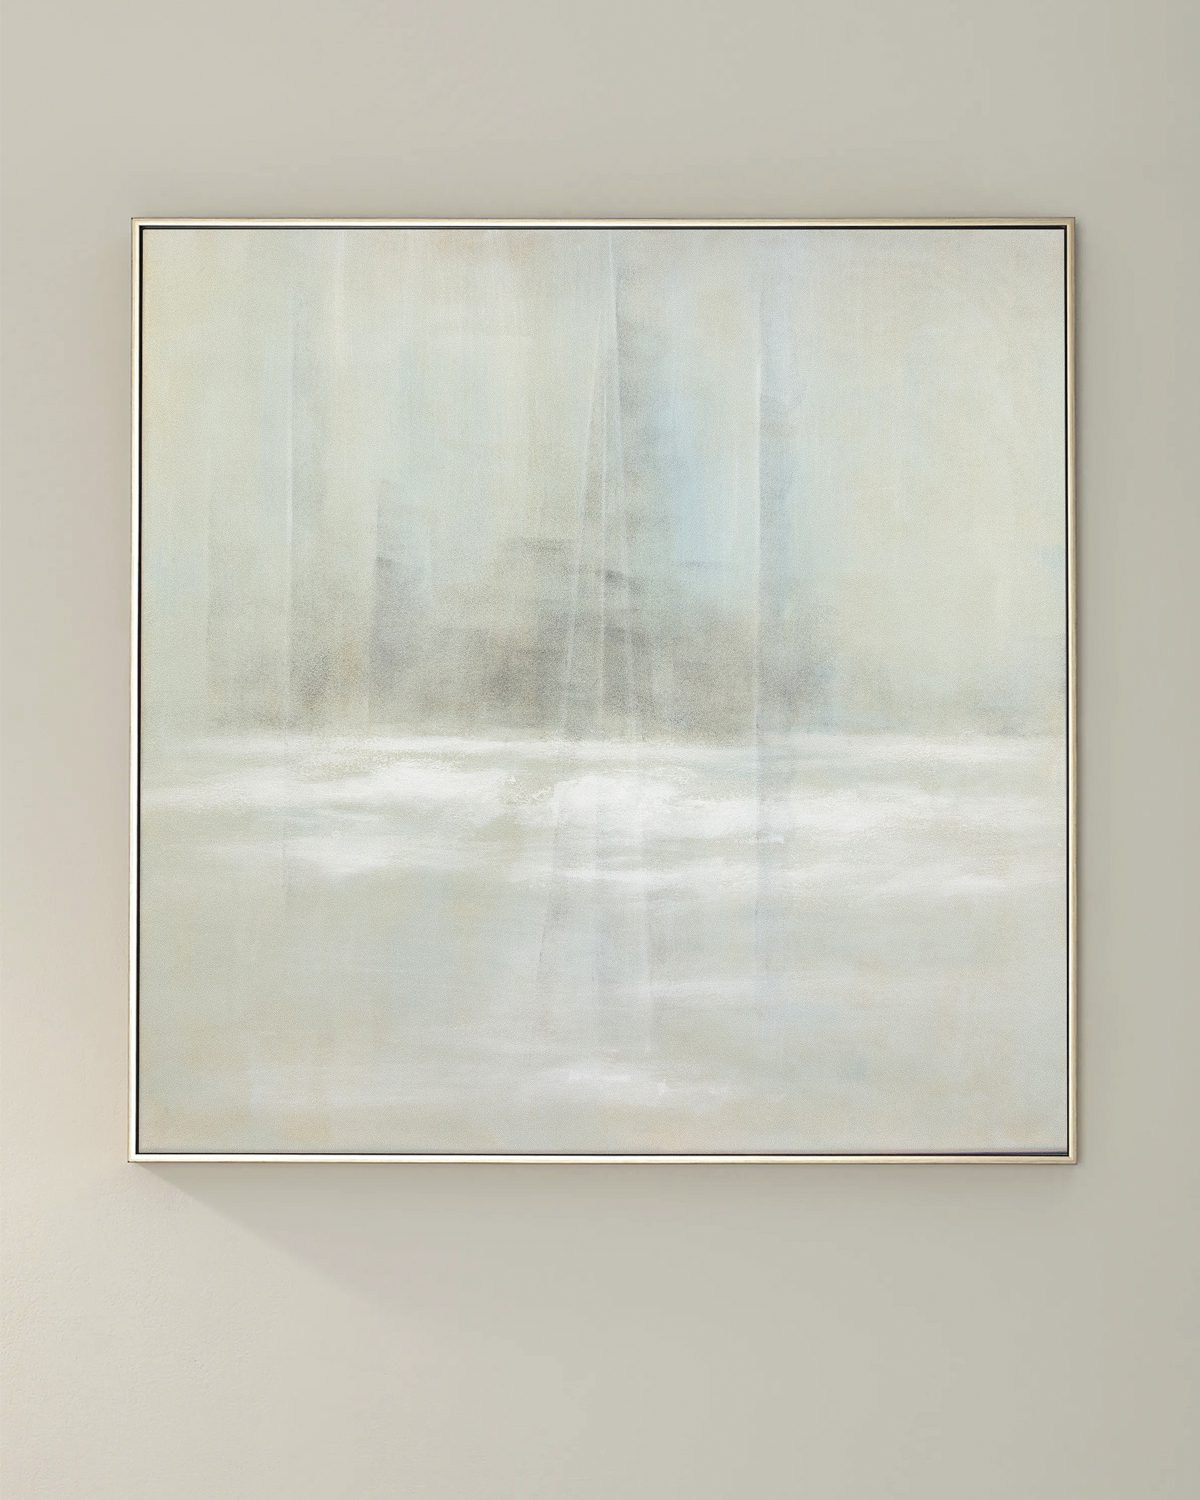 Интерьерная картина "Нордкап" - Цвет рамы: Серебро.